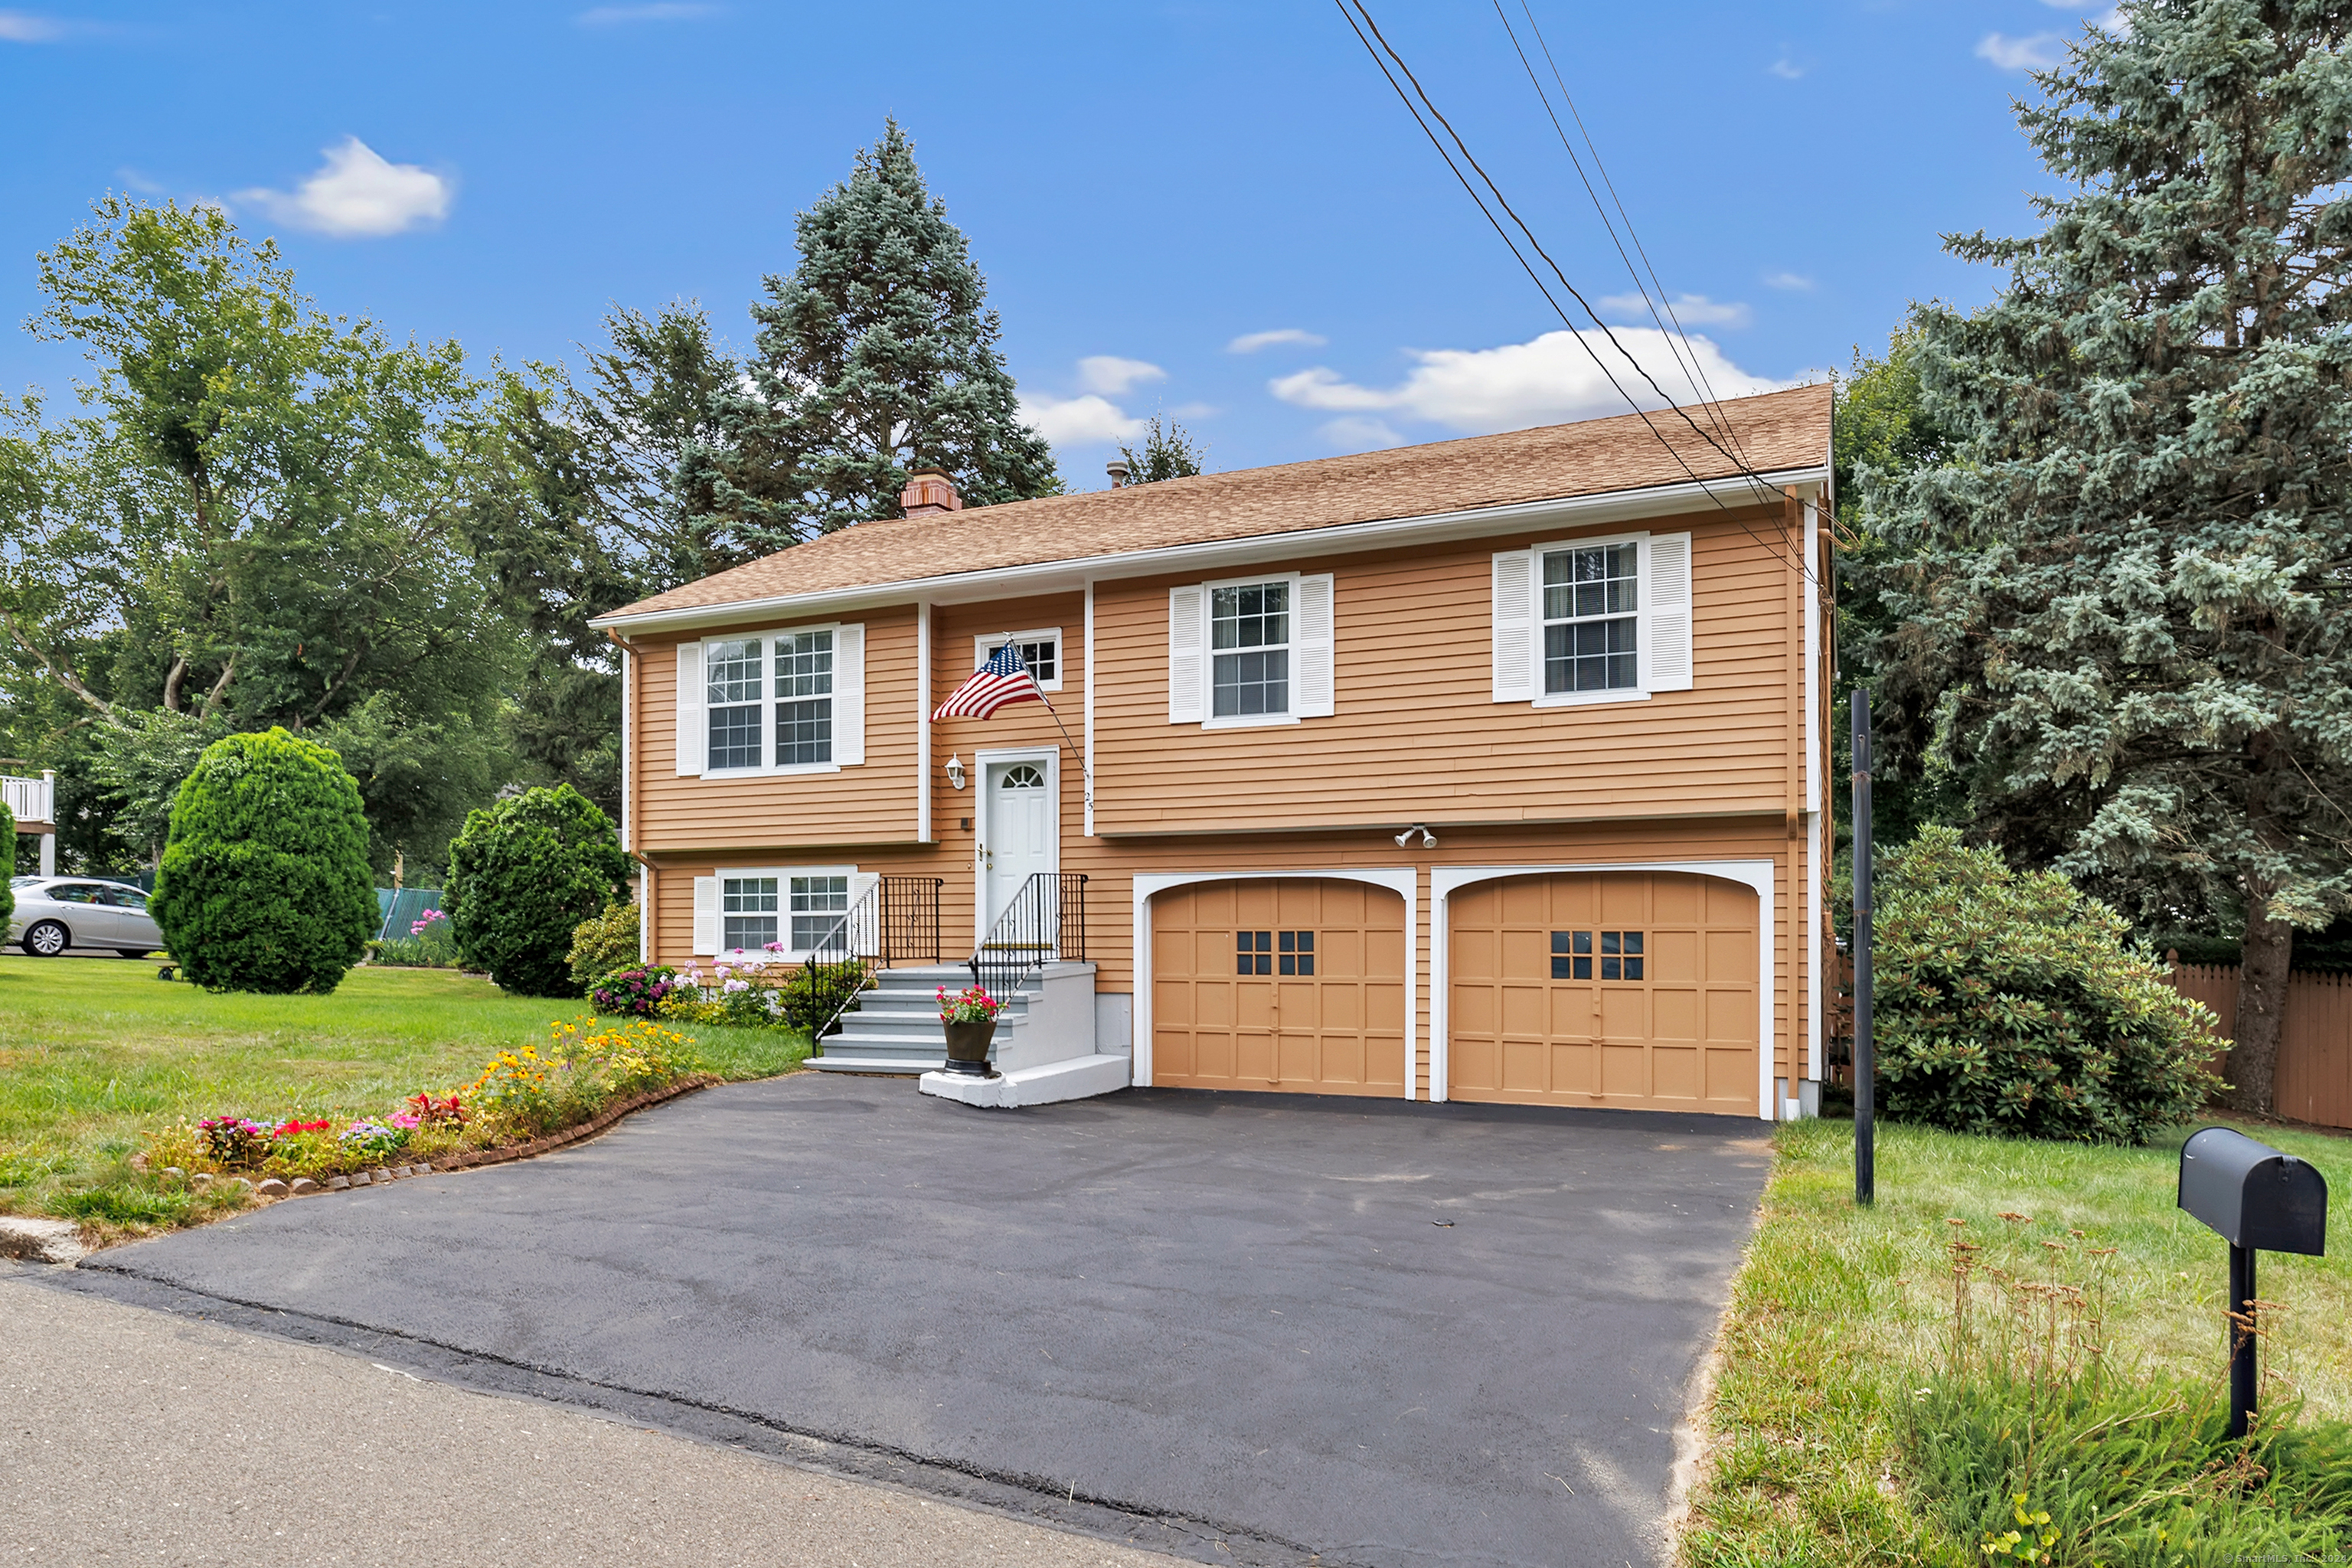 Property for Sale at 25 Sullivan Place, Bridgeport, Connecticut - Bedrooms: 3 
Bathrooms: 2 
Rooms: 7  - $419,900